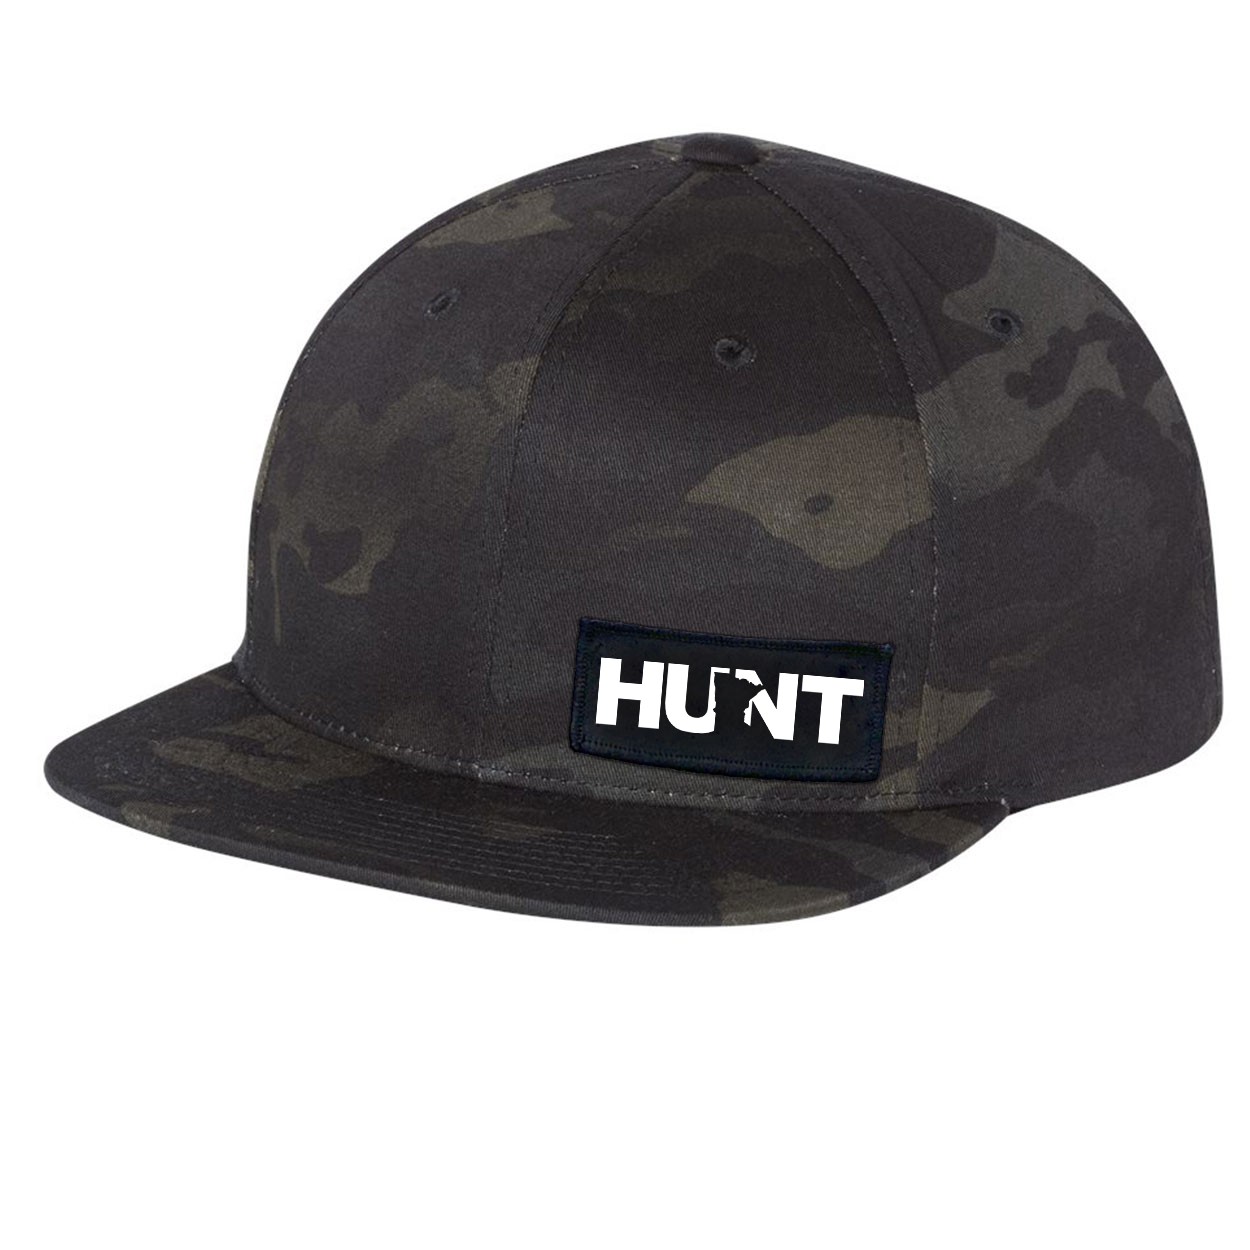 Hunt Minnesota Night Out Woven Patch Flat Brim Snapback Hat Black Camo (White Logo)